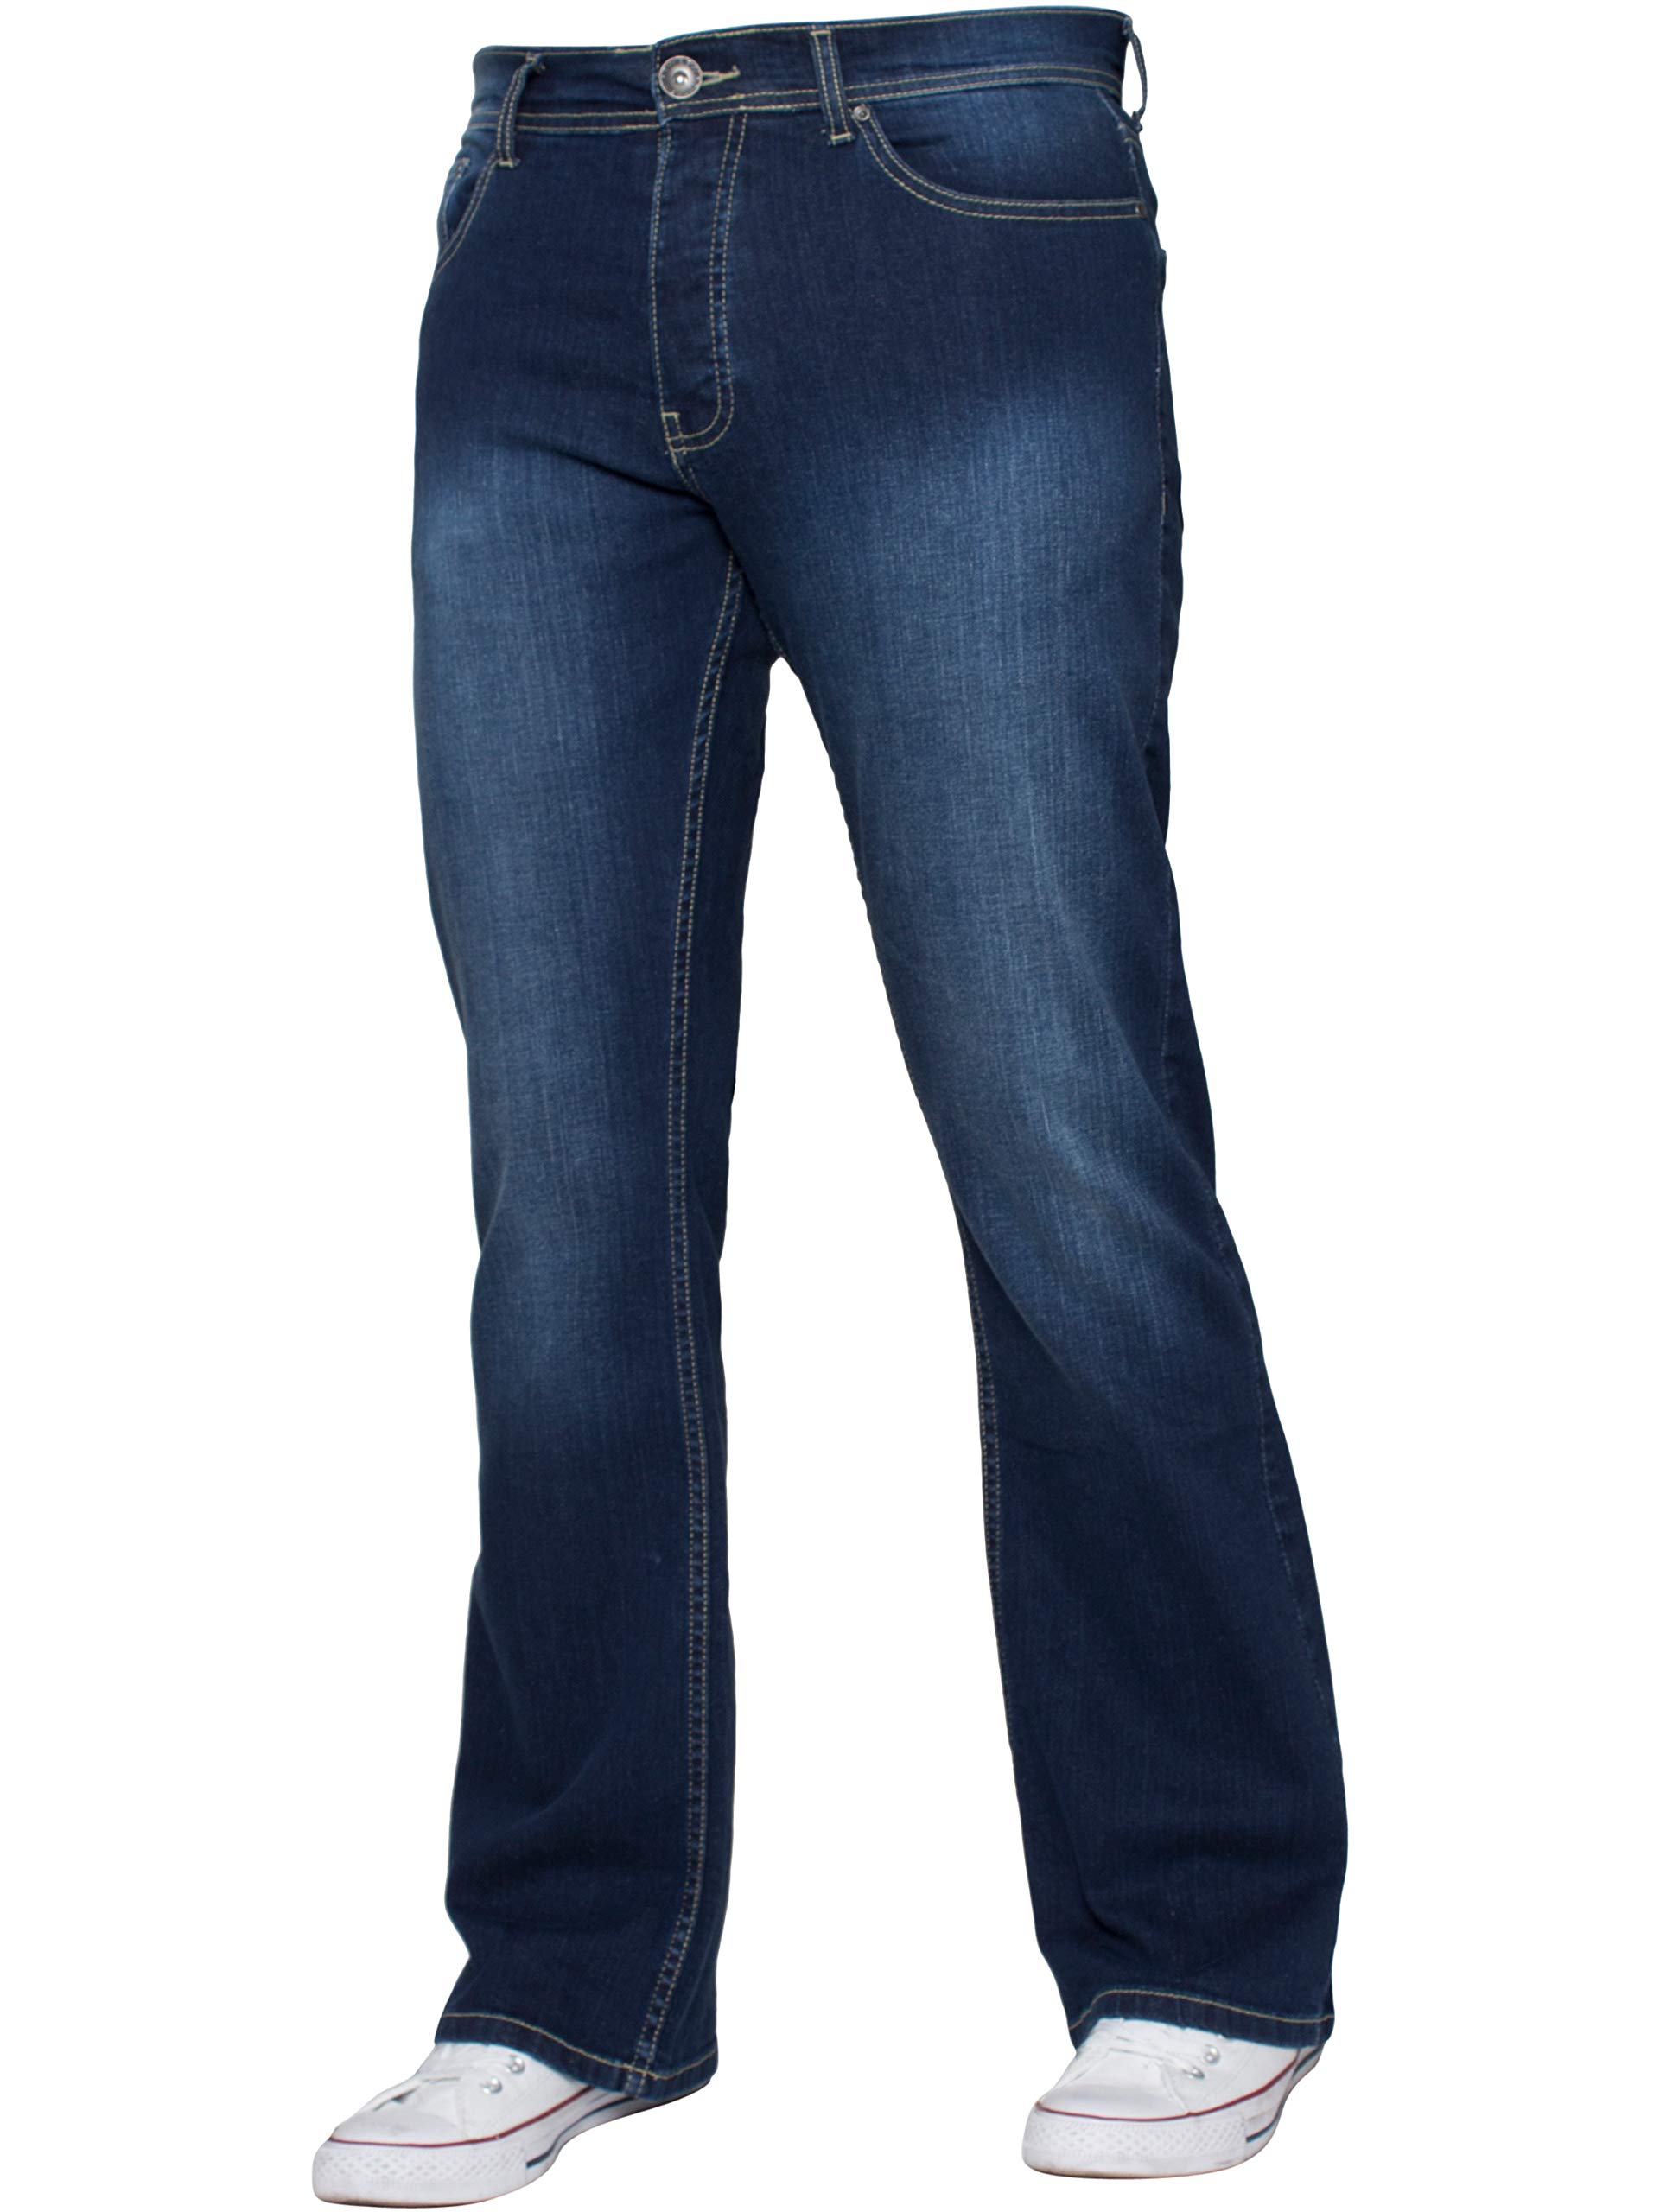 Enzo Herren Bootcut Jeans, Mid-Stonewash, 32 W / 32 L